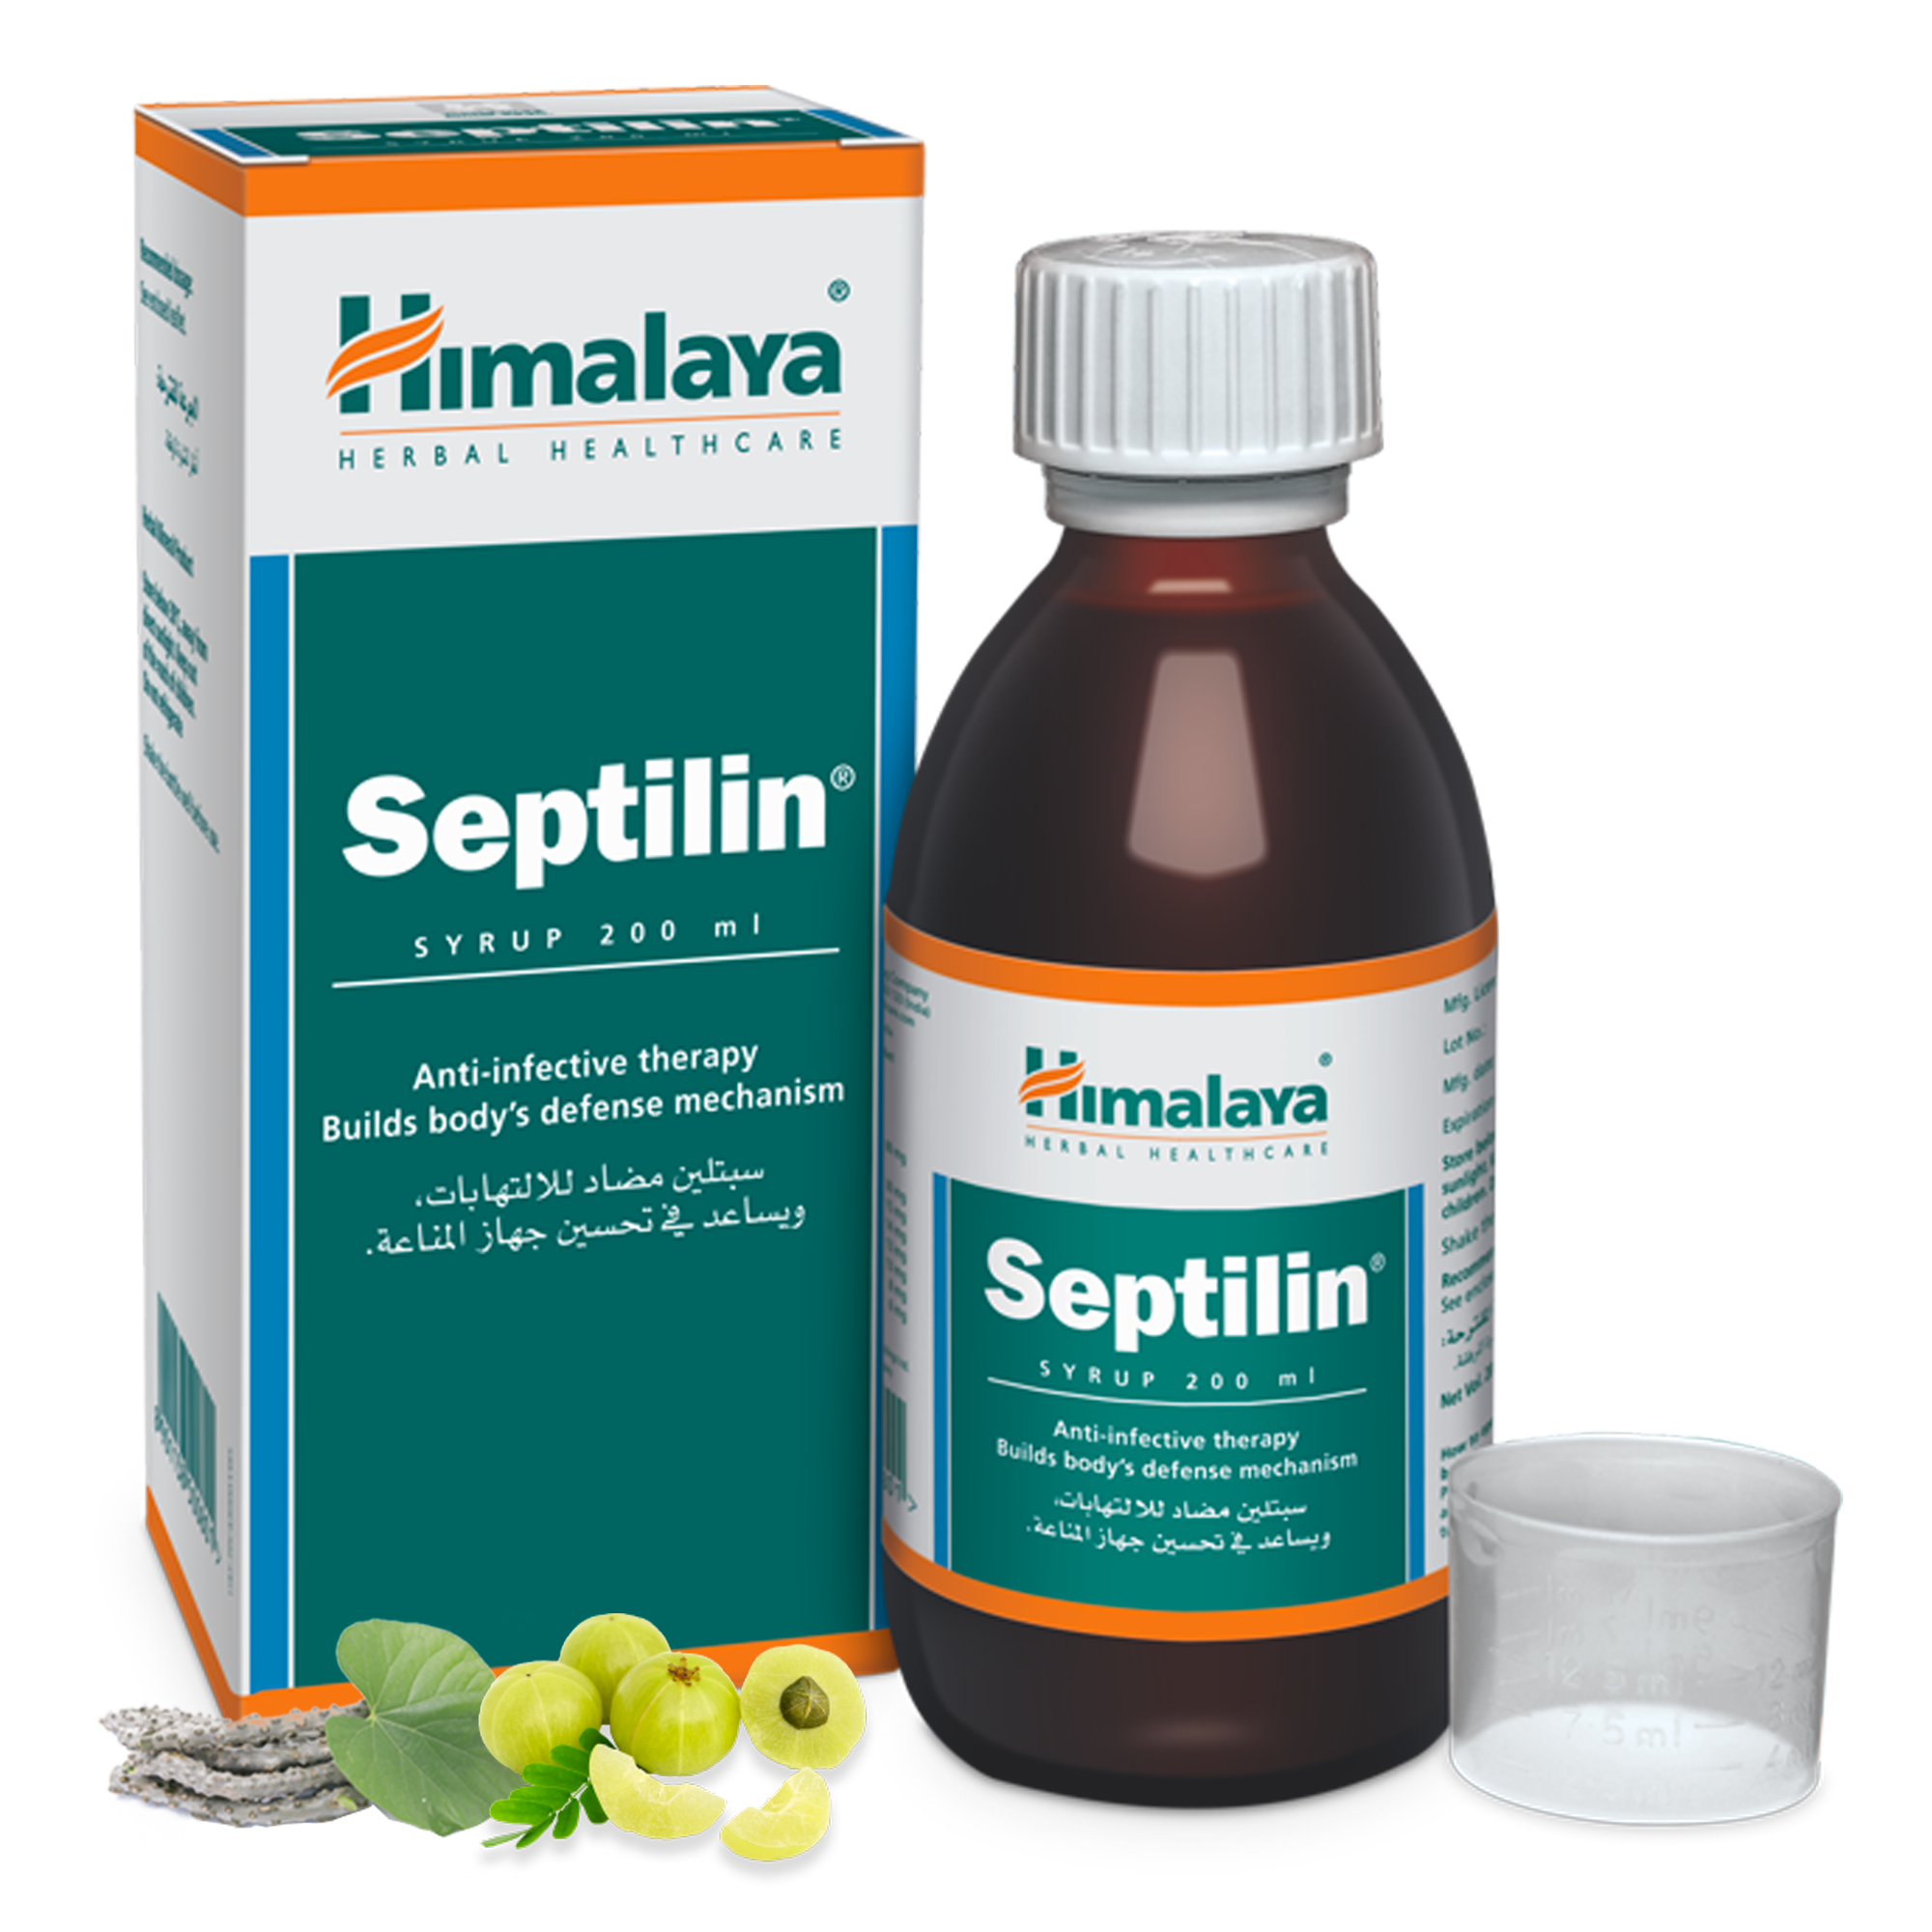 Himalaya Septilin Syrup 200ml - The Natural Immune Booster